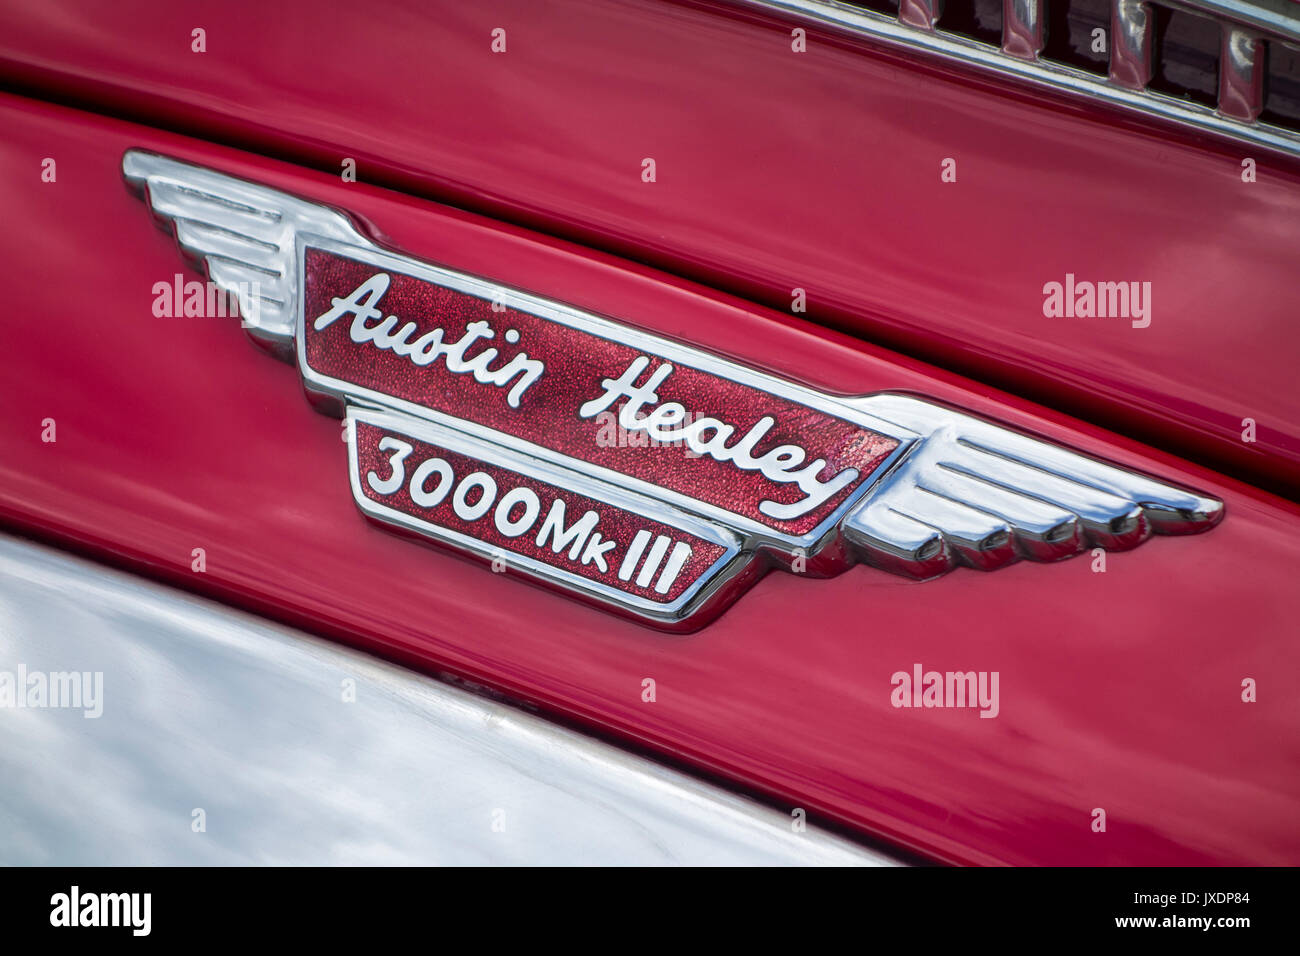 British red classic sports car Austin-Healey 3000 MkIII / Mark III badge logo Stock Photo